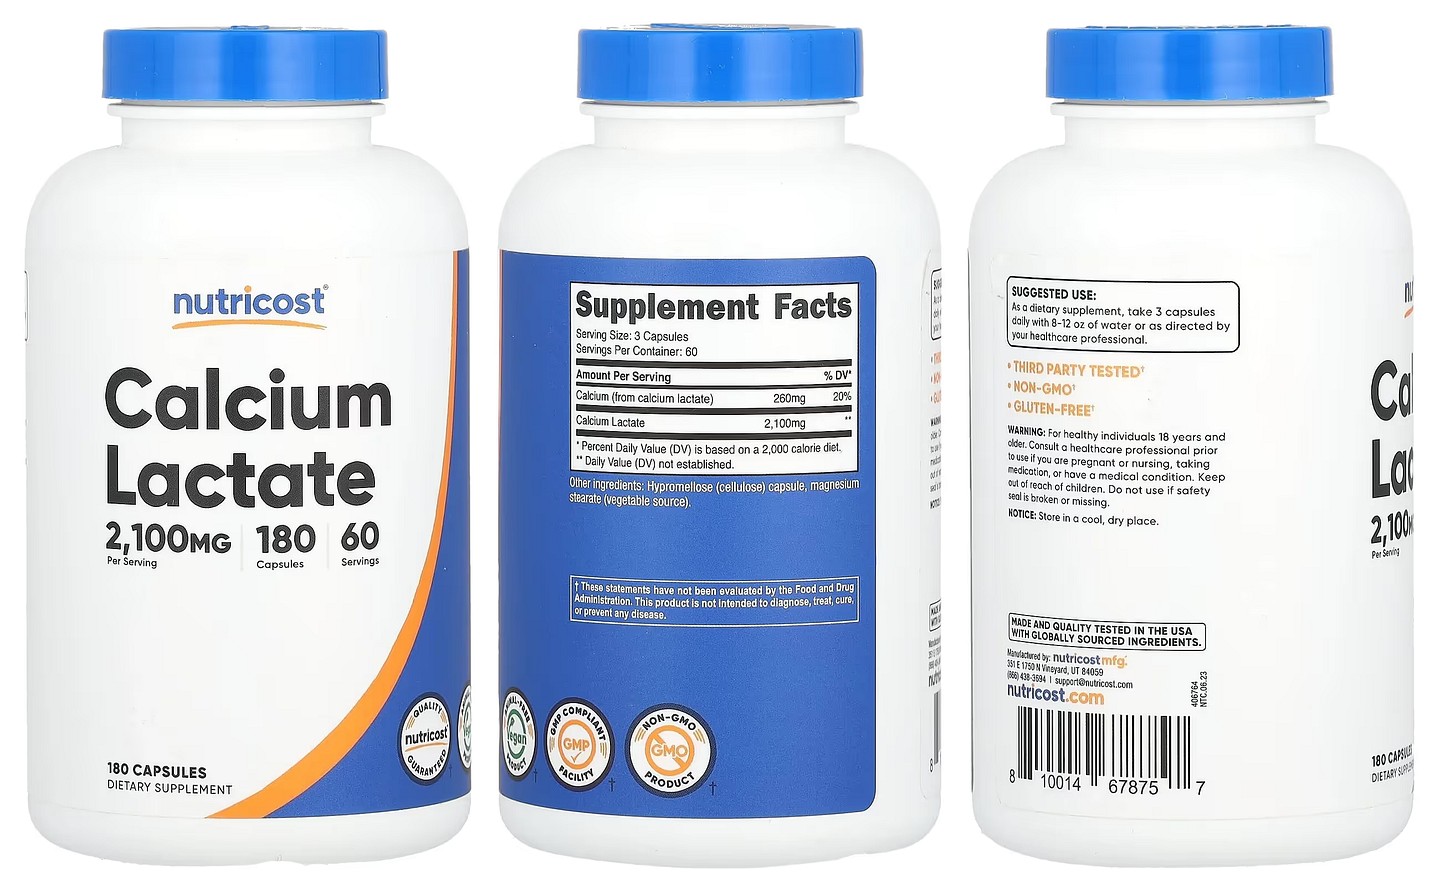 Nutricost, Calcium Lactate packaging